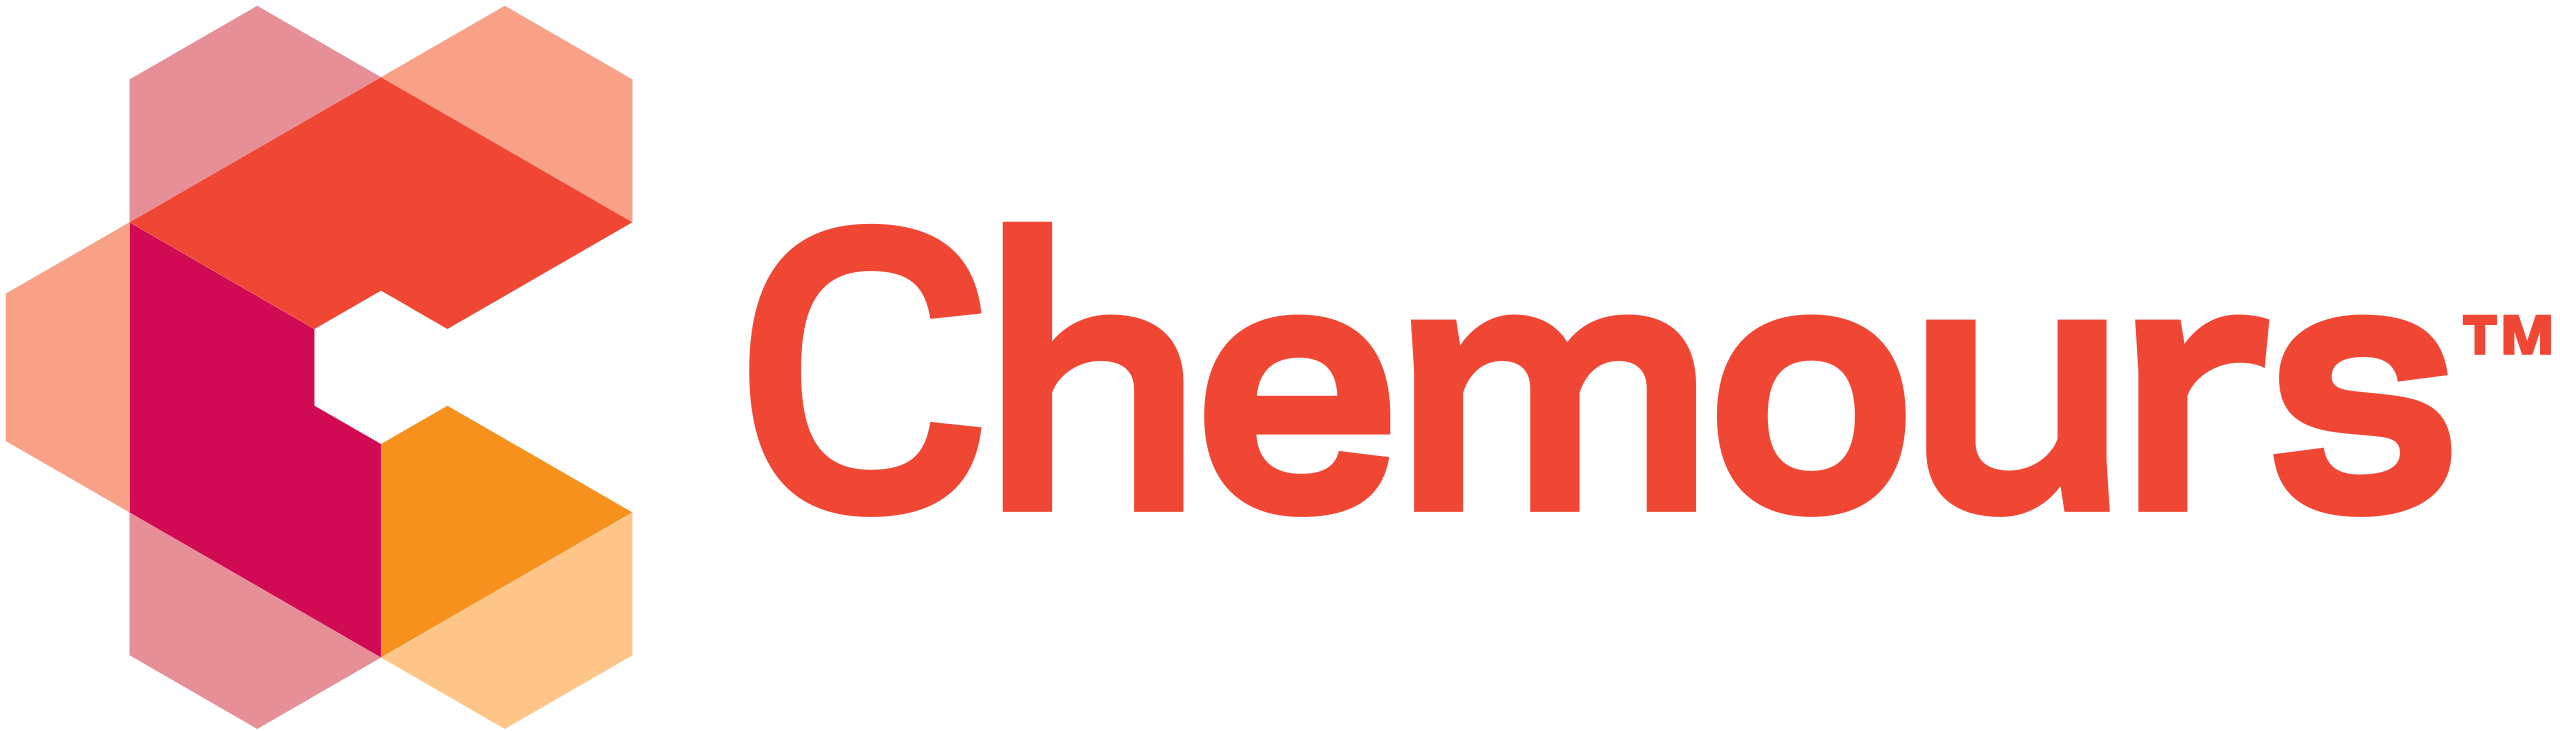 2560px-Chemours logo.svg